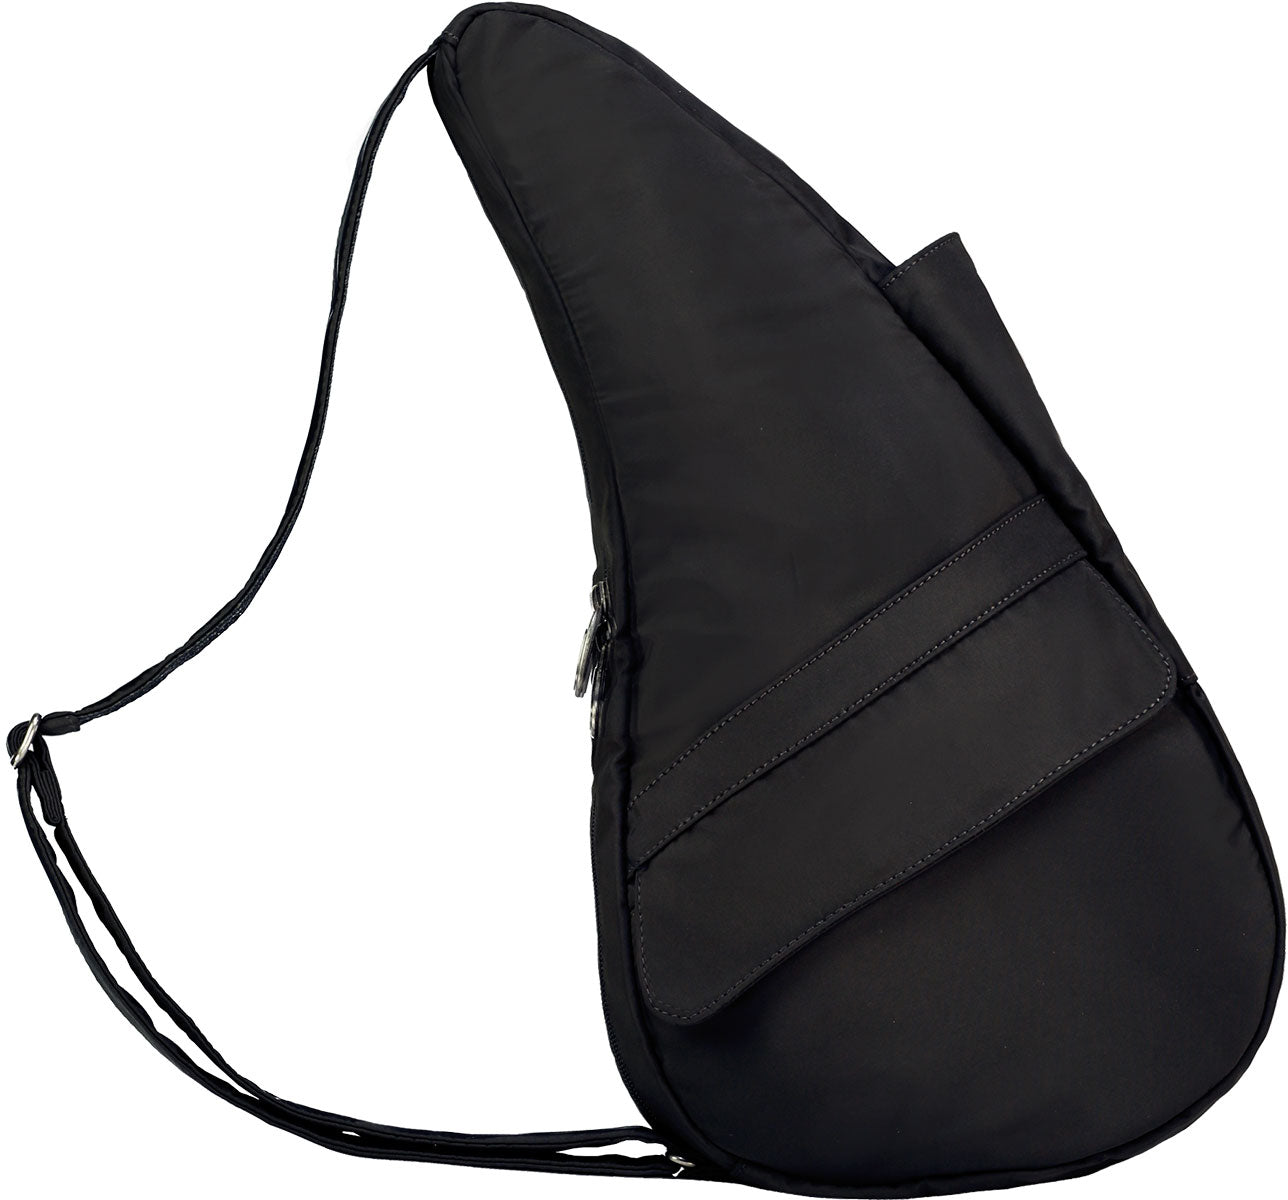 AmeriBag Healthy Back Bag tote Microfiber Small (Black)